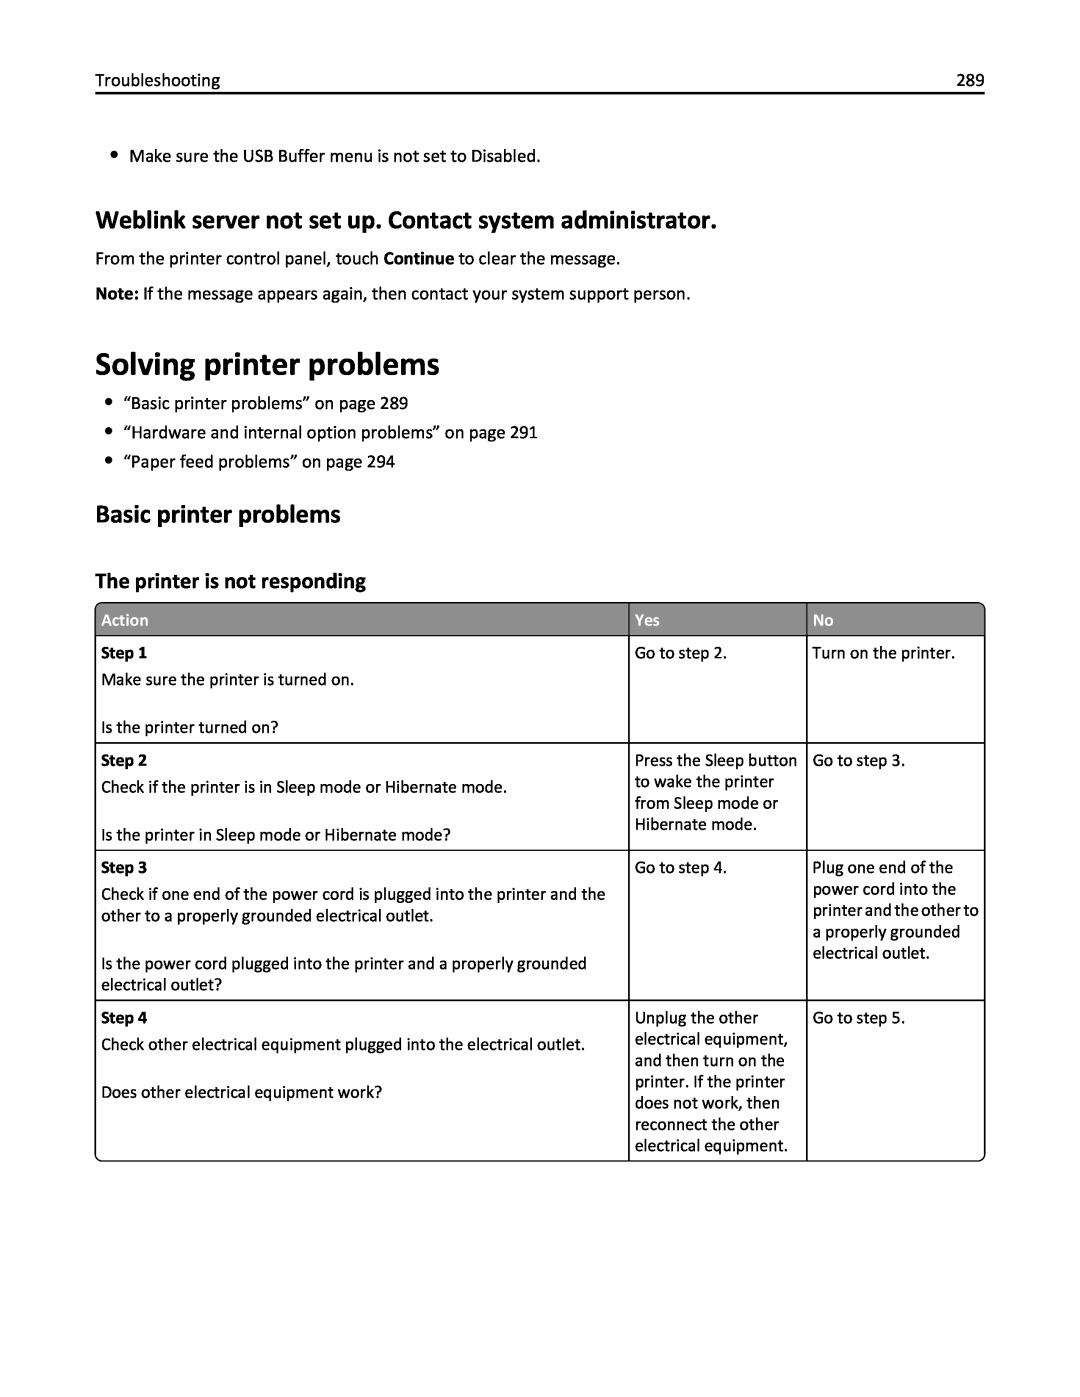 Lexmark 037, 237 Solving printer problems, Weblink server not set up. Contact system administrator, Basic printer problems 